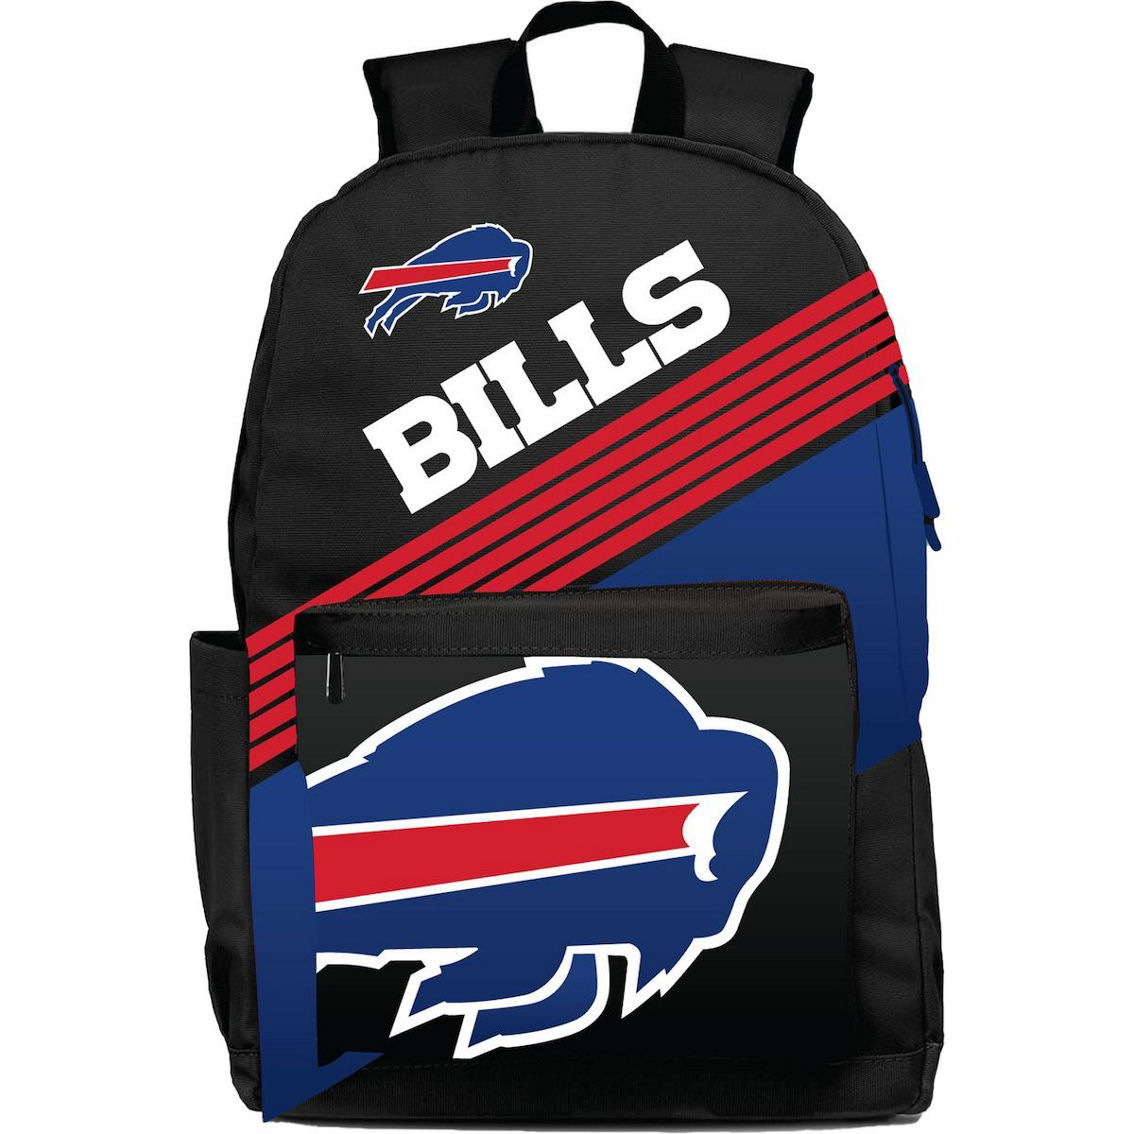 MOJO MOJO Buffalo Bills Ultimate Fan Backpack - Image 2 of 2